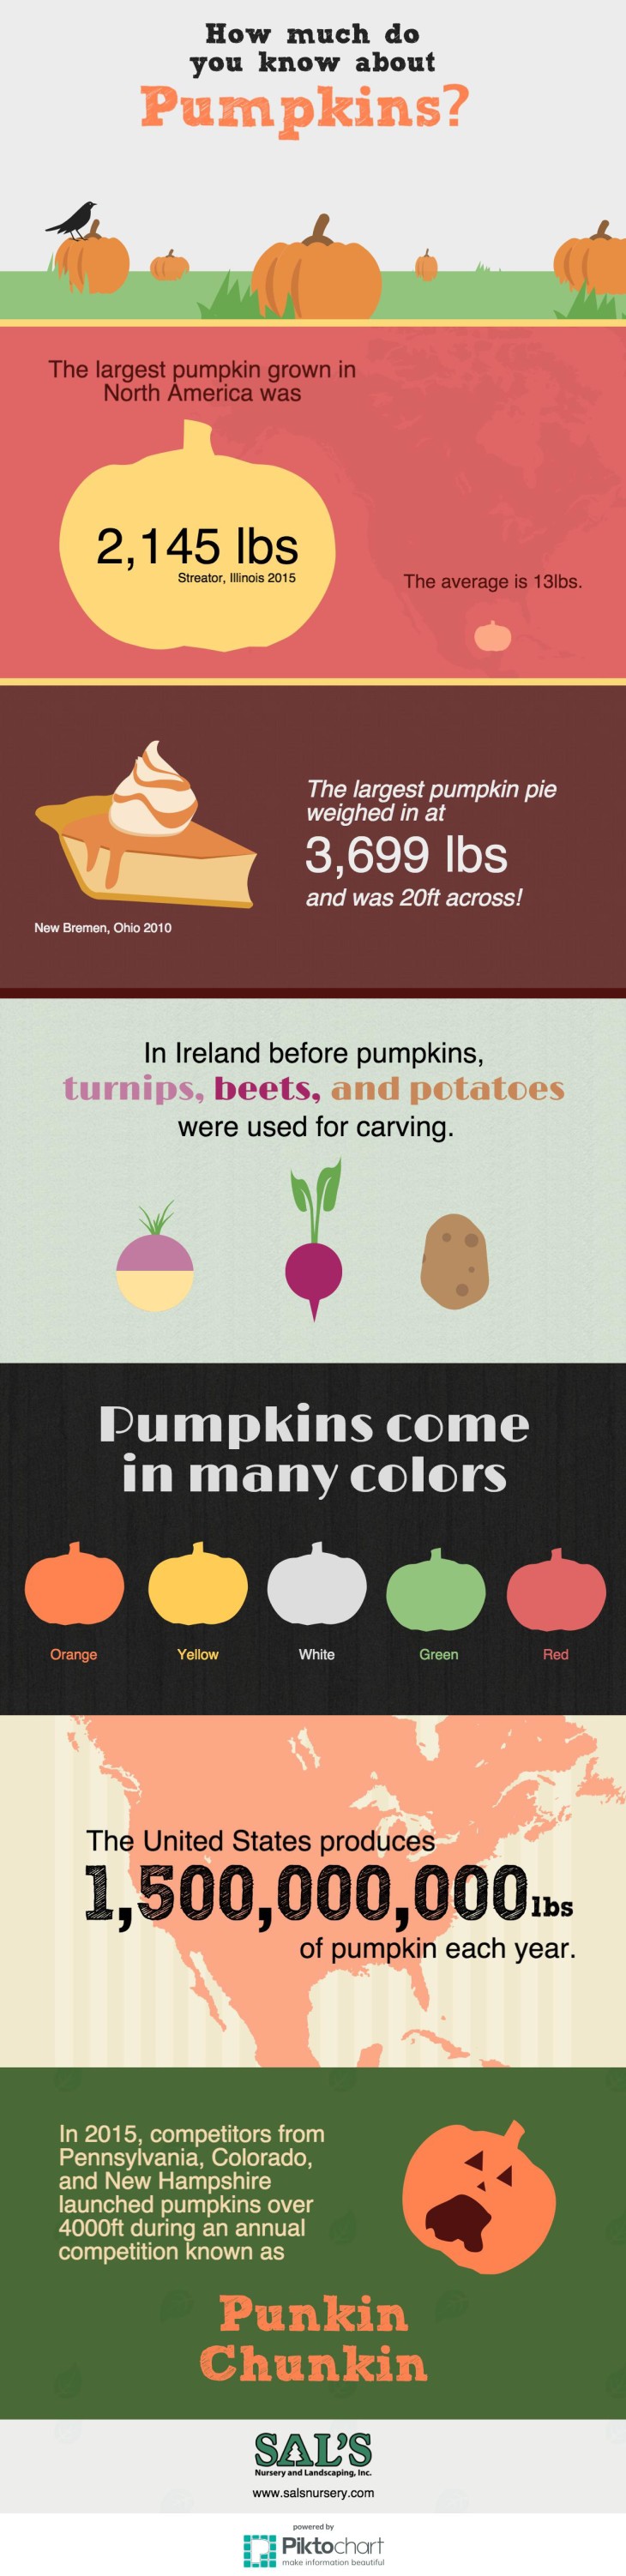 Pumpkin facts infographic